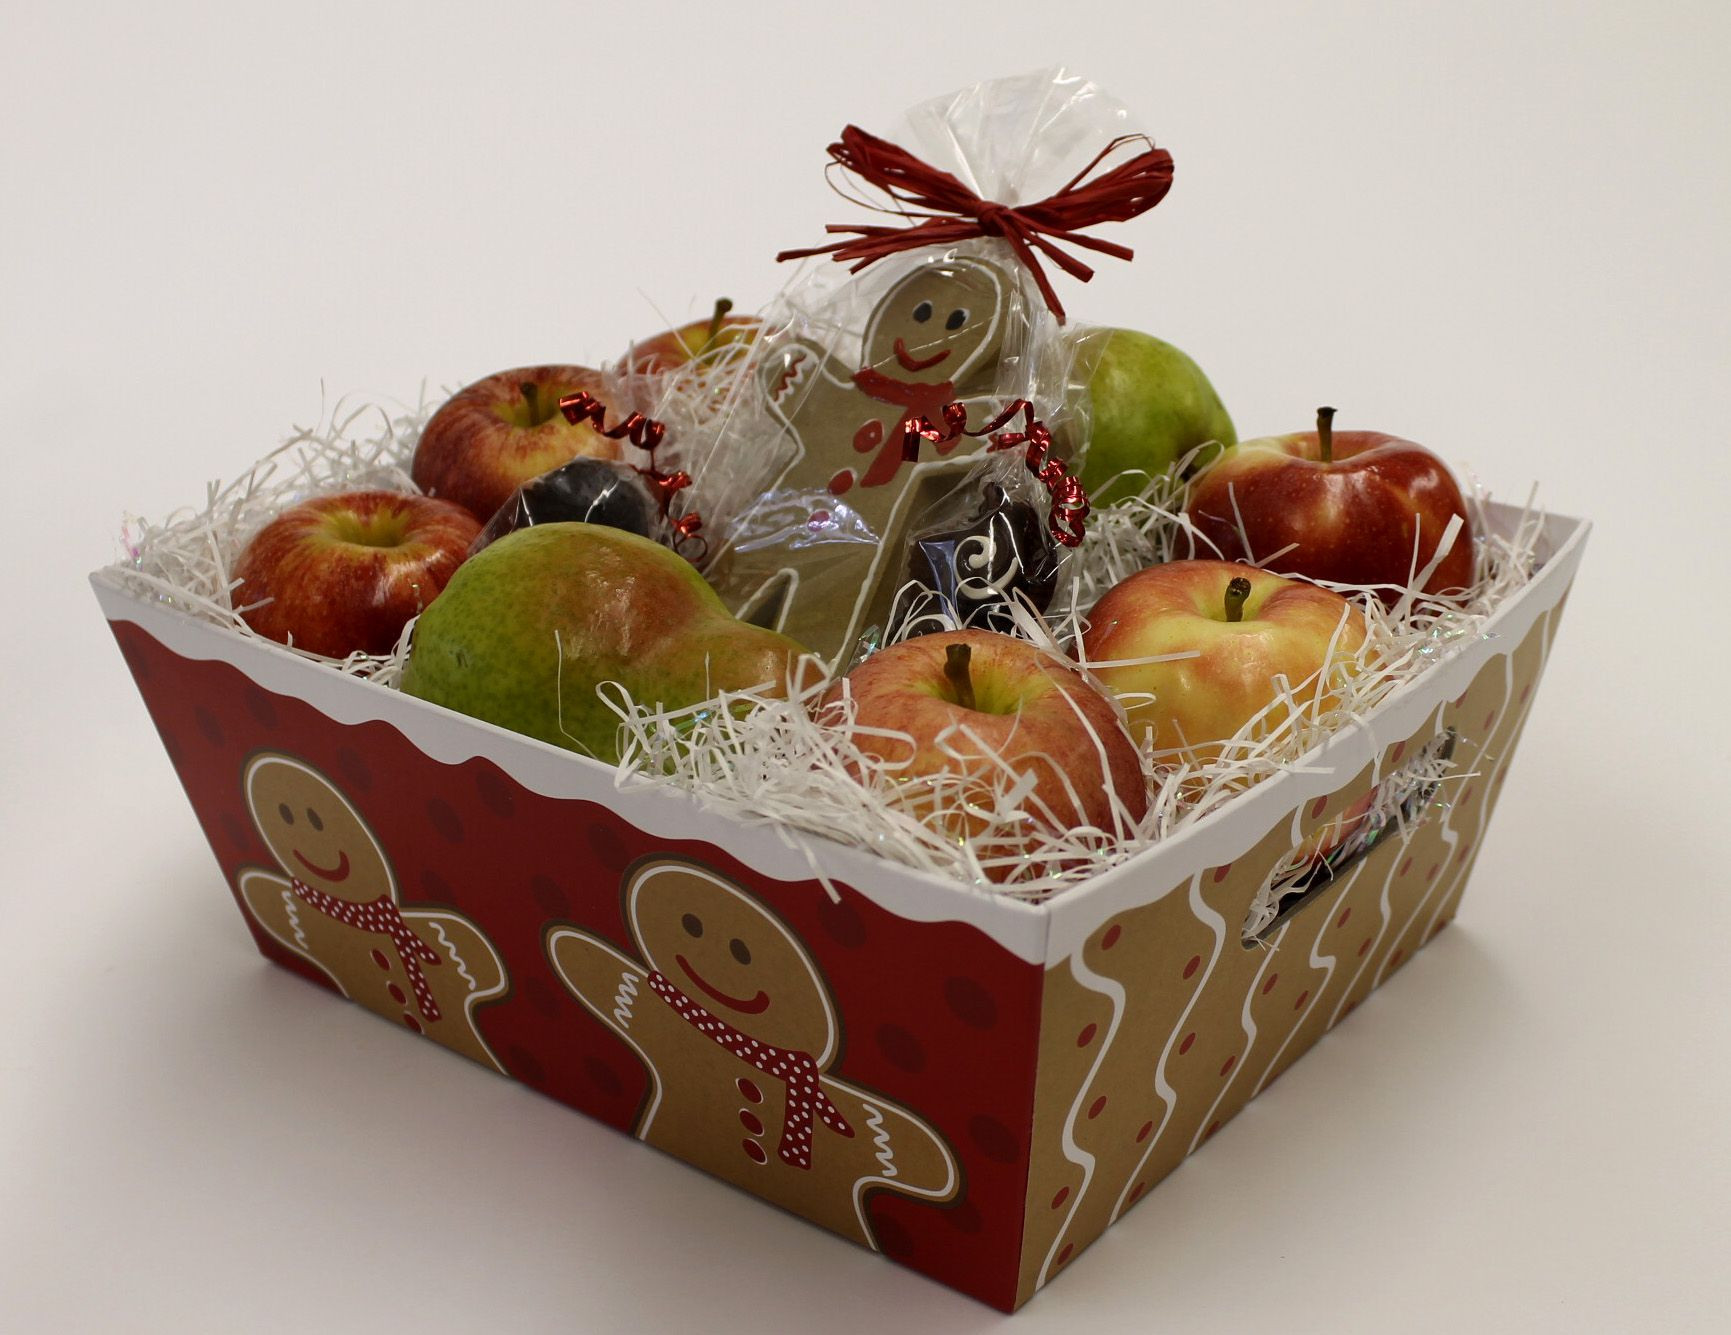 Best ideas about Fruit Gift Ideas
. Save or Pin fruit basket idea my work stuff Pinterest Now.